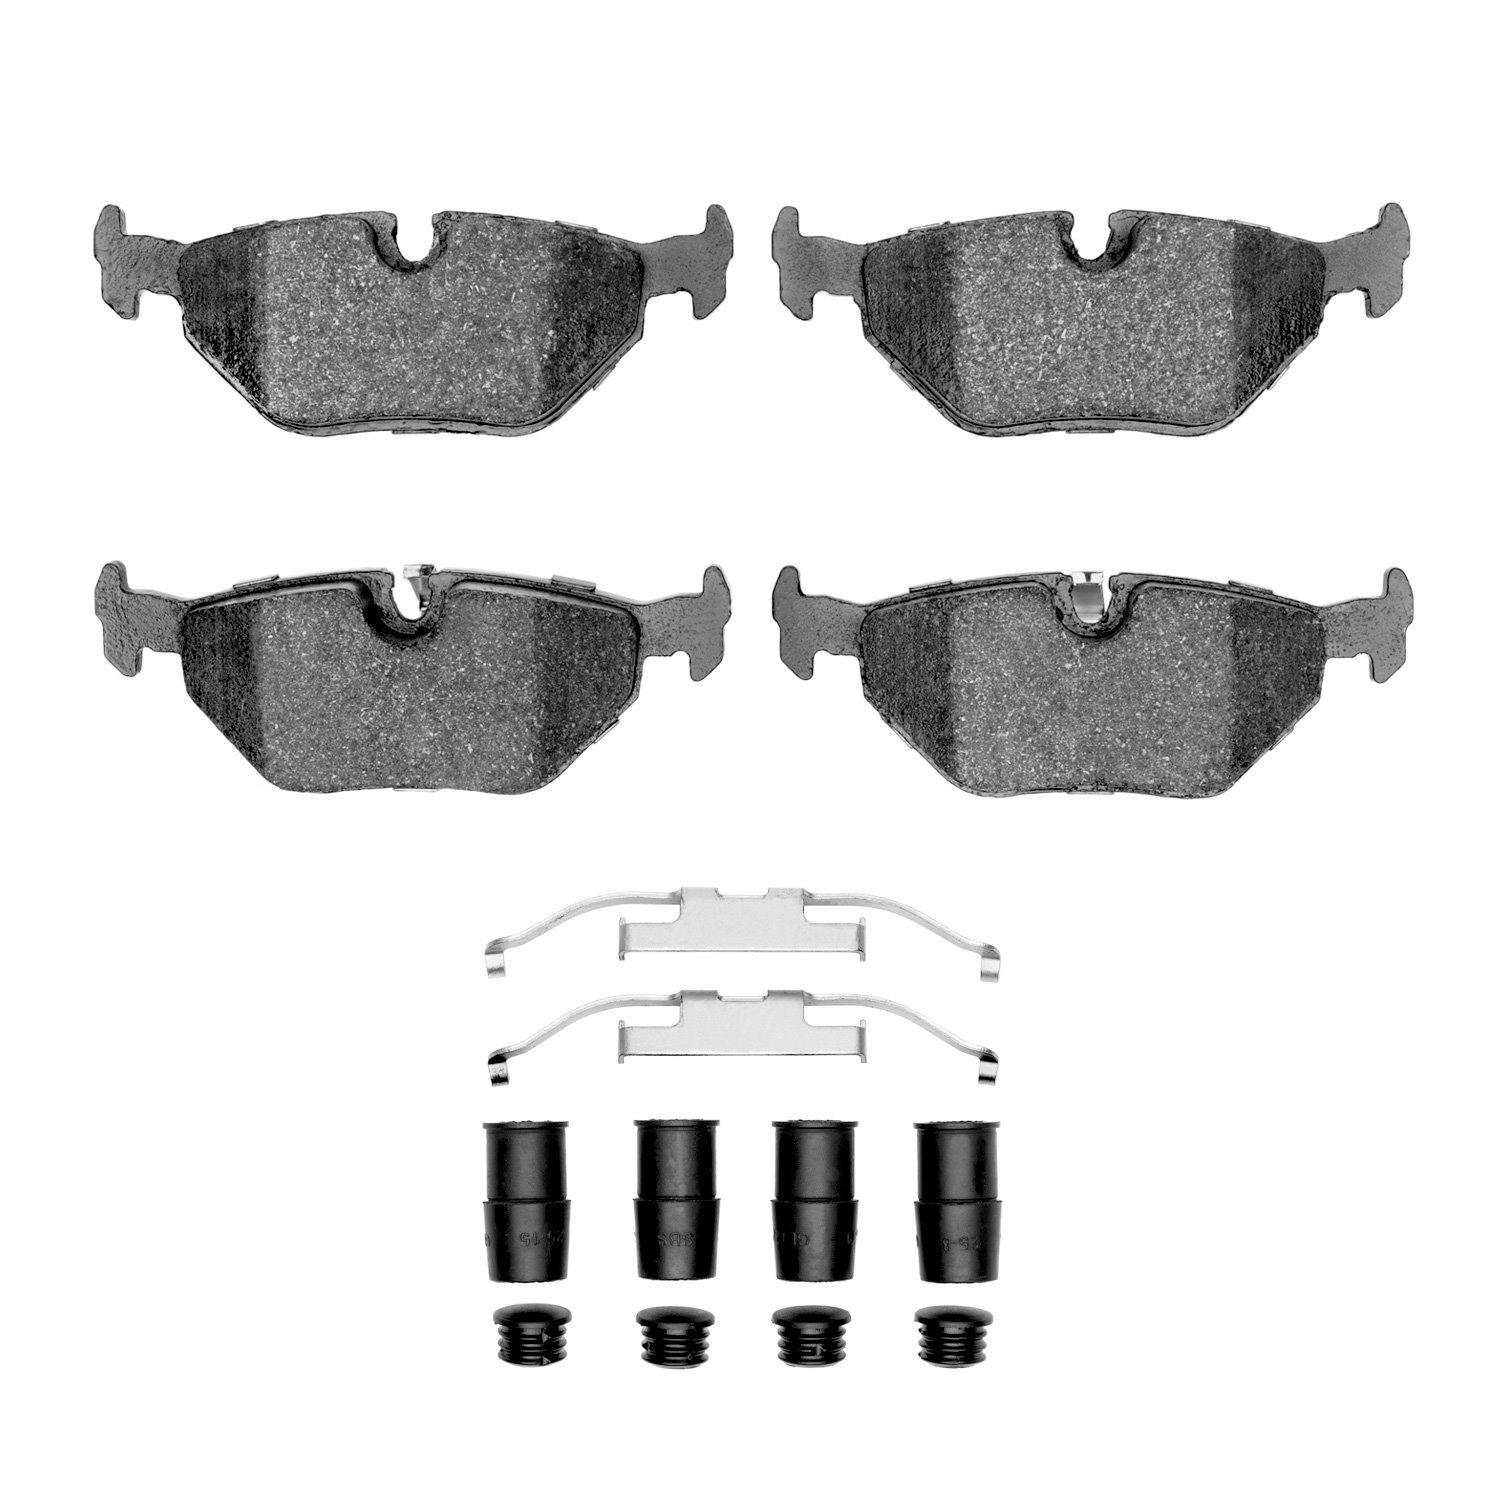 1552-0692-01 5000 Advanced Low-Metallic Brake Pads & Hardware Kit, 1991-2008 BMW, Position: Rear